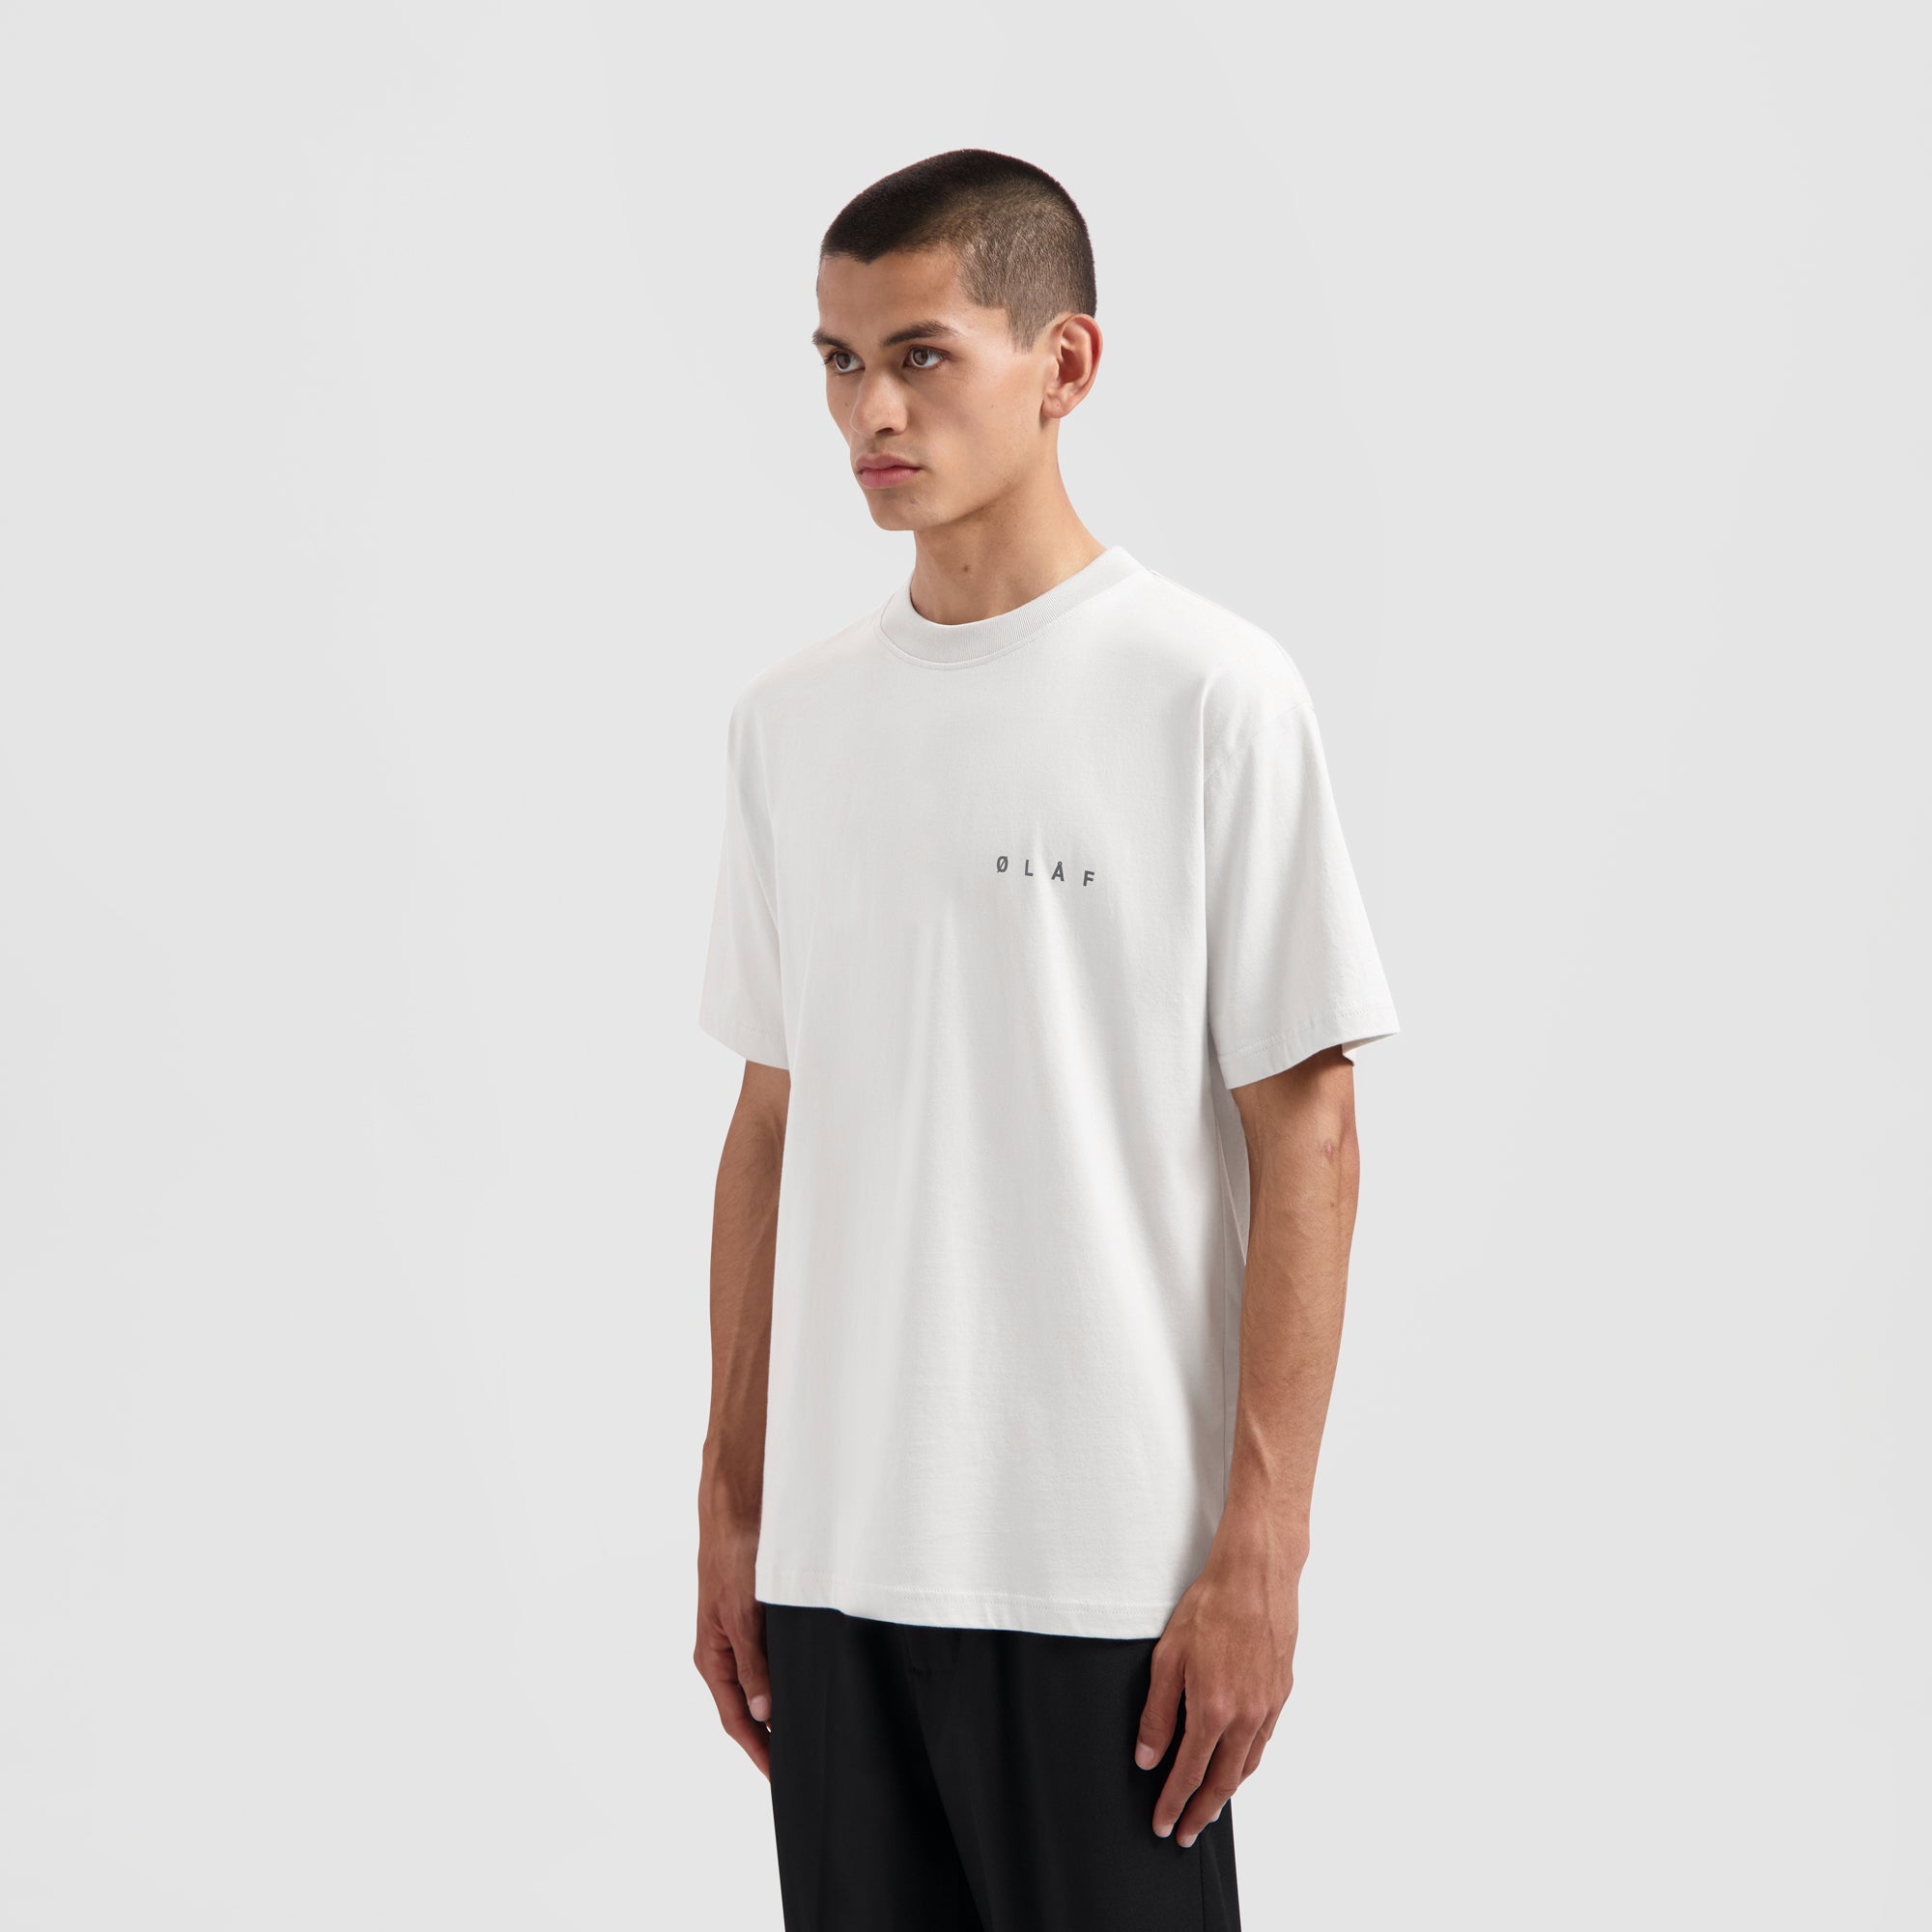 ØLÅF Face T-shirt Optical White